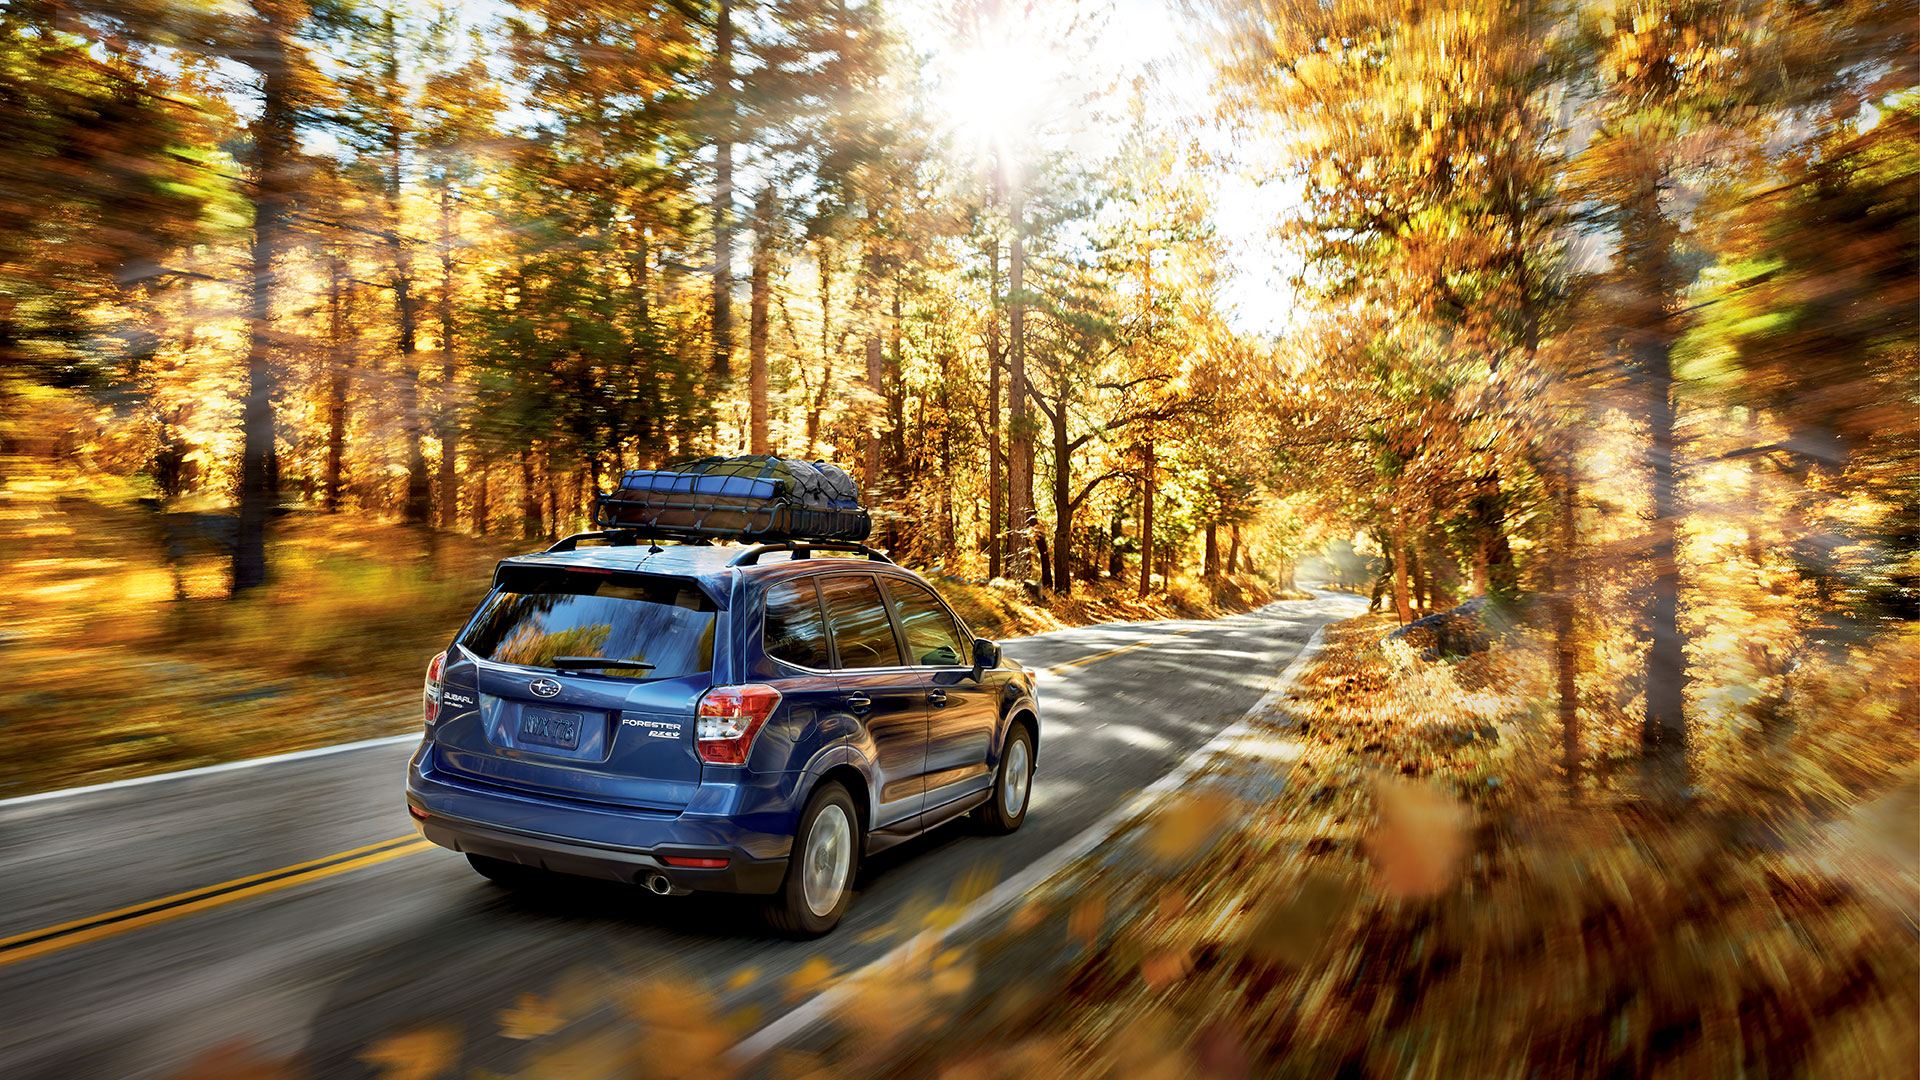 Subaru Forester Wallpaper Autumn